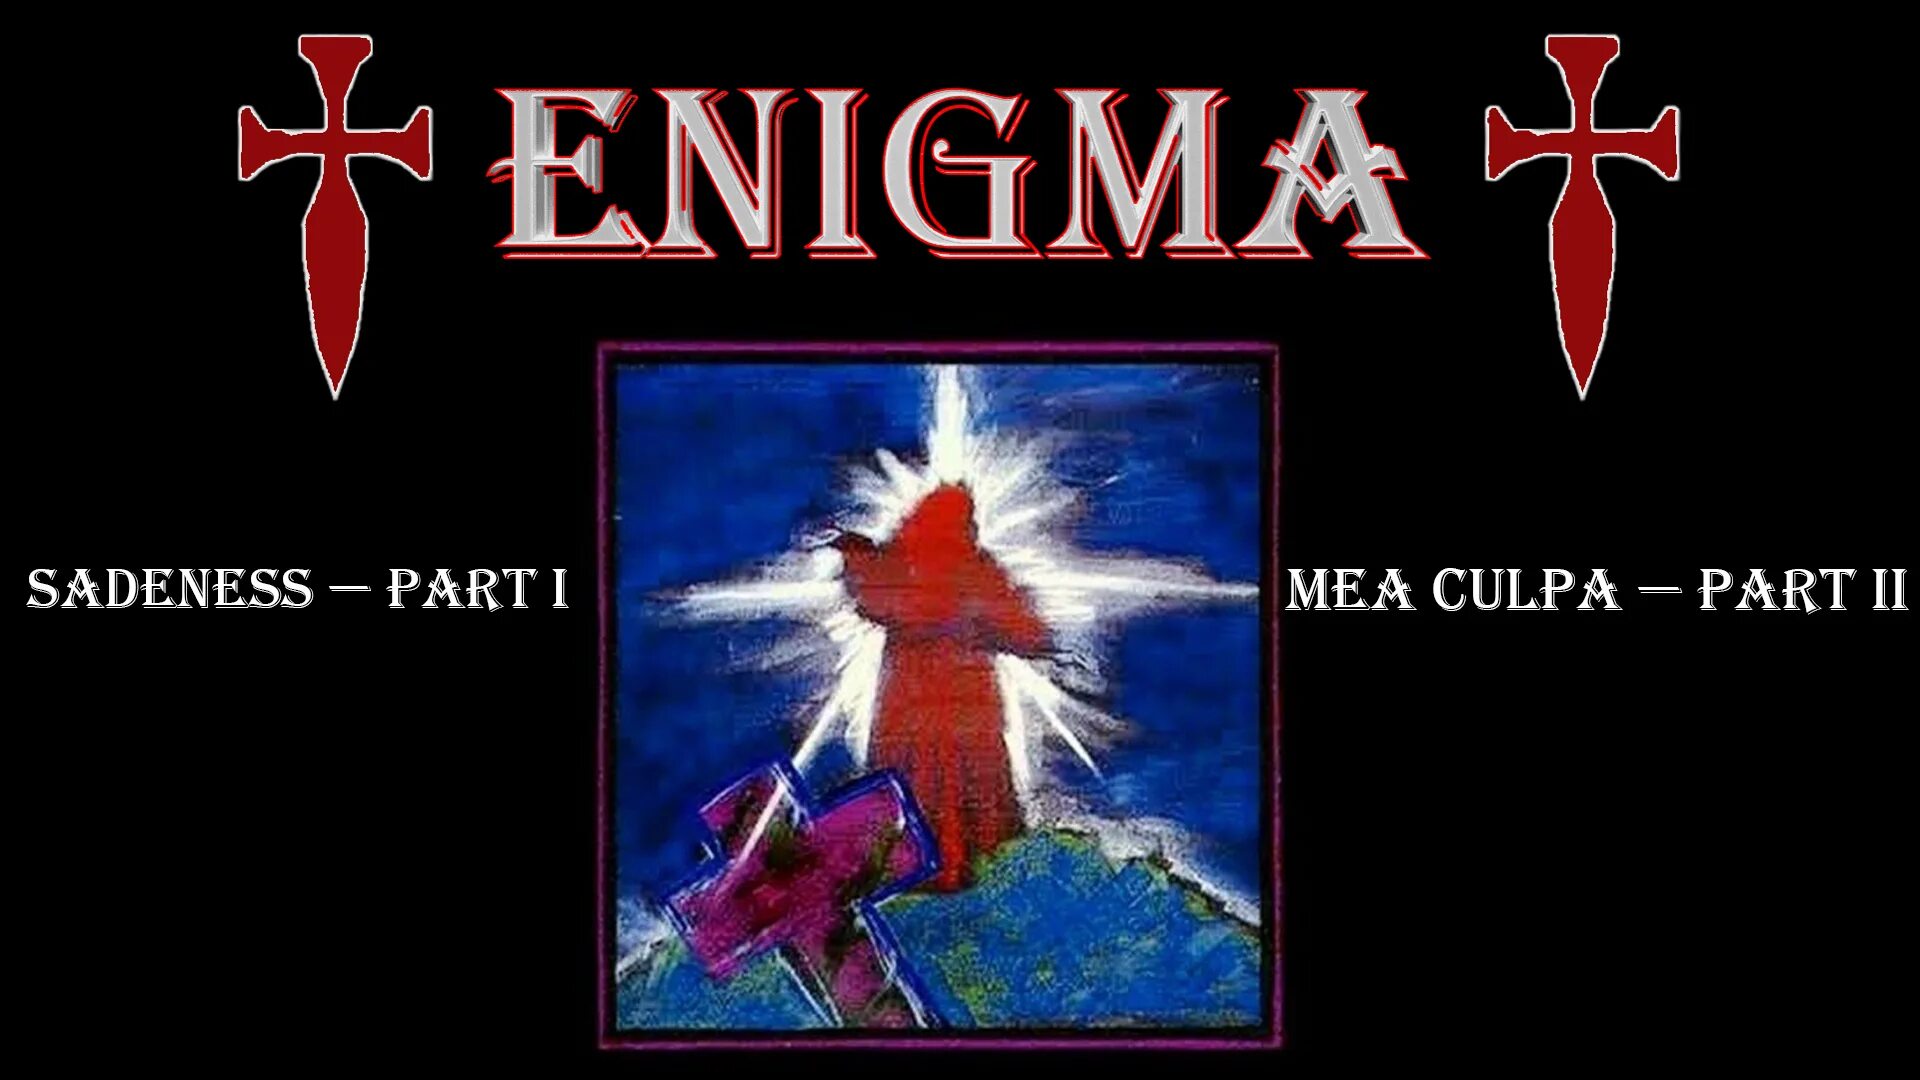 Энигма без перерыва. Энигма. Enigma "MCMXC A.D.". Enigma MCMXC A.D. the Limited Edition. Enigma MCMXC A.D. 1990.